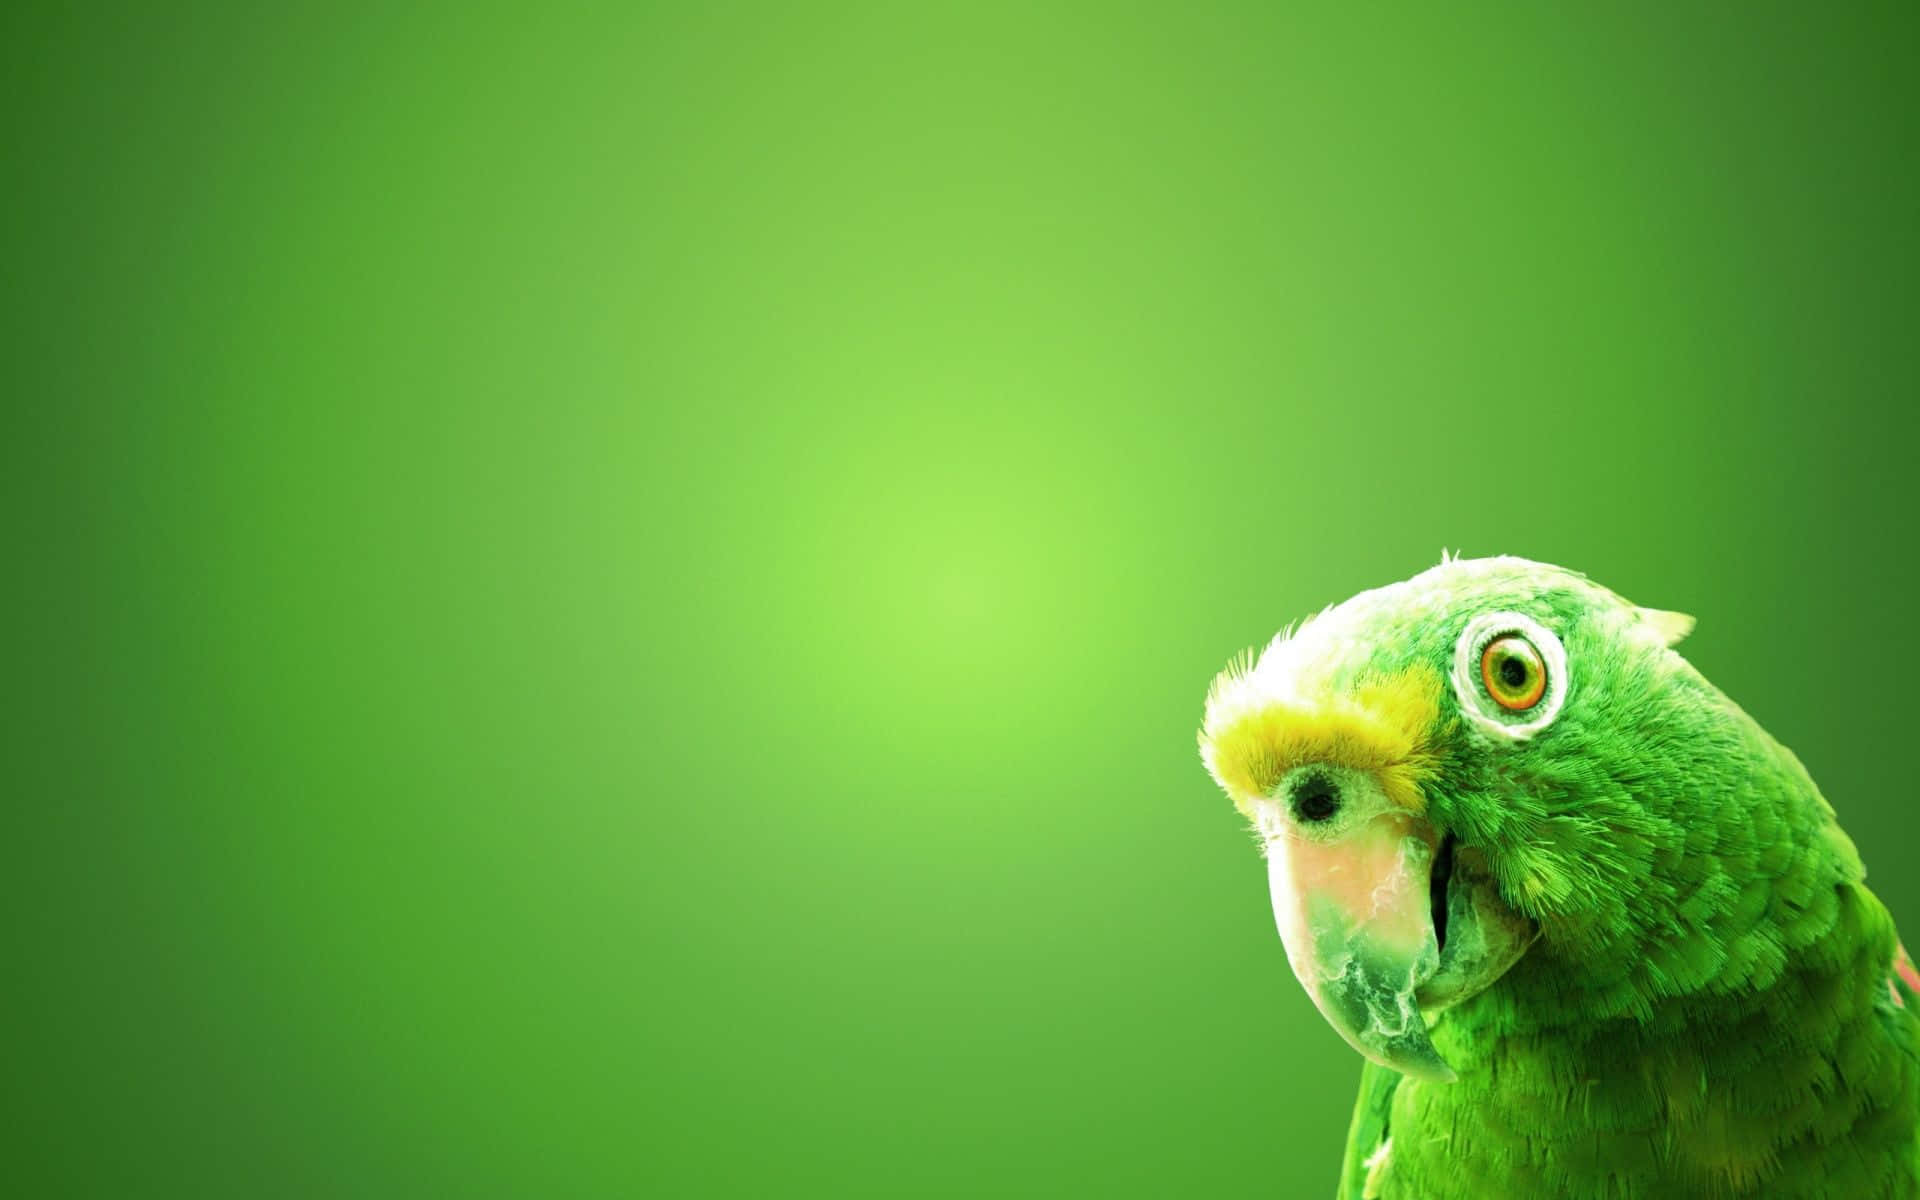 A beautiful green parrot takes flight